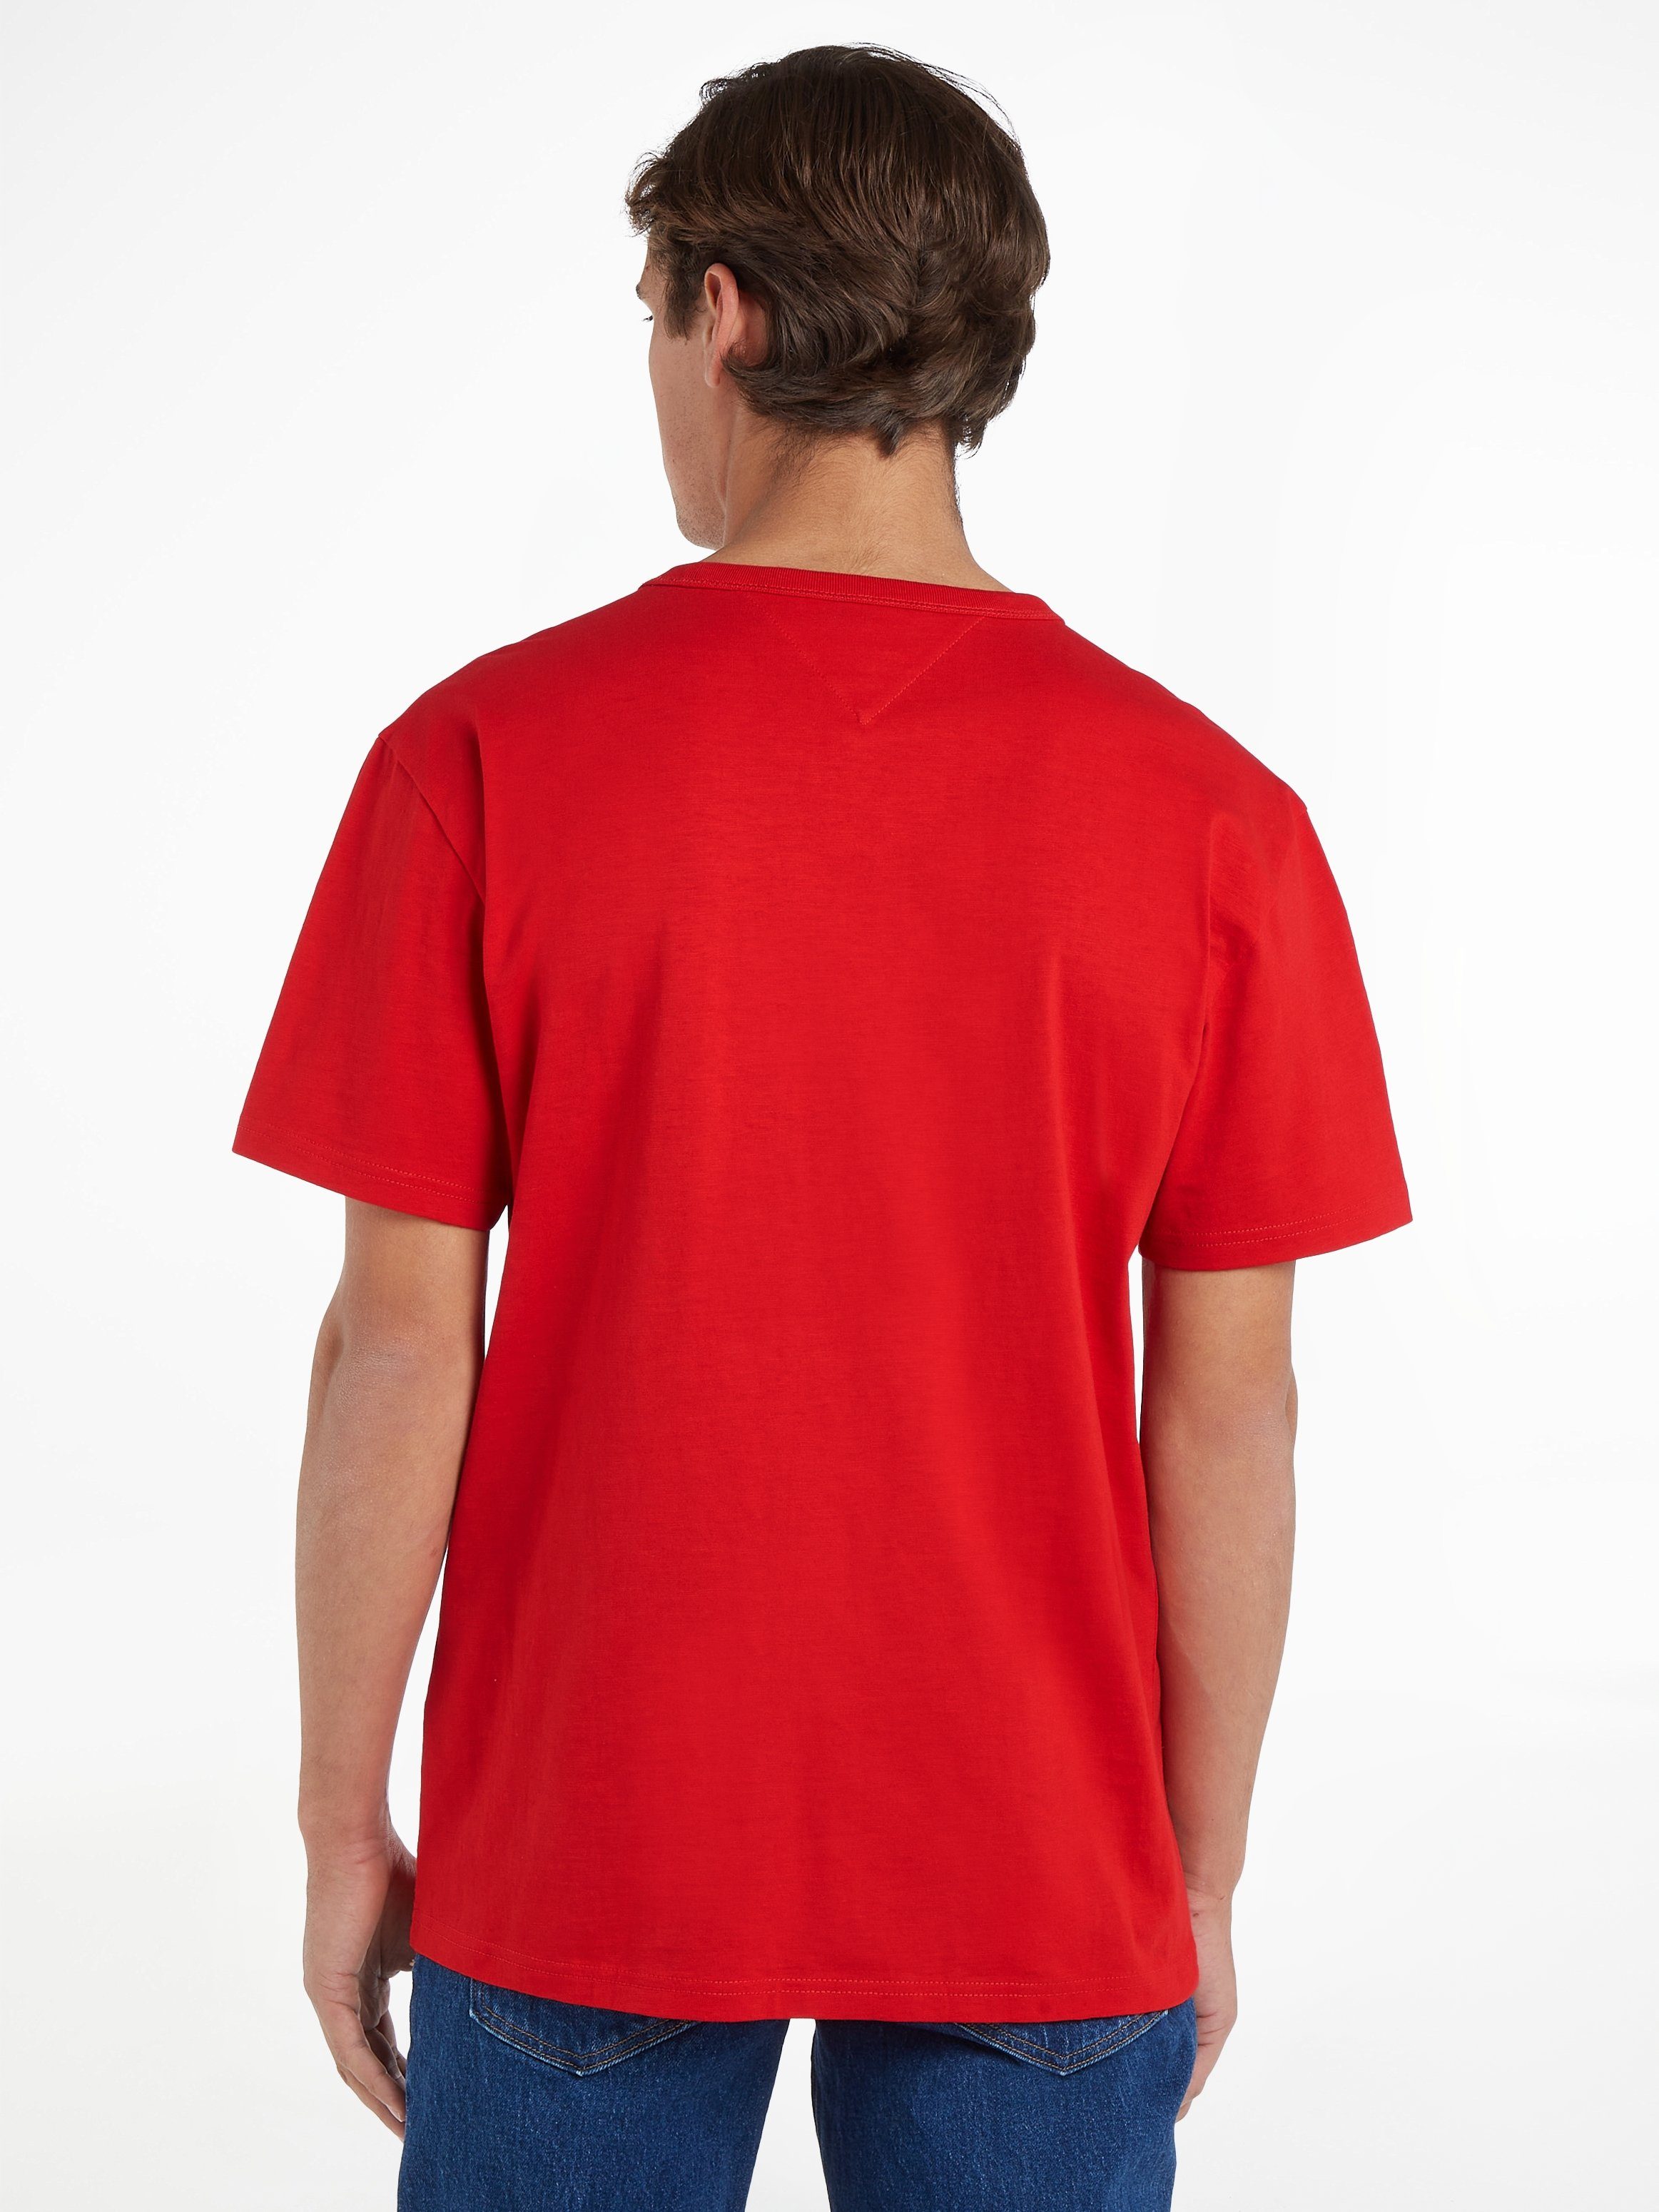 BADGE POCKET CLSC Tommy Deep TJM T-Shirt Crimson Jeans TEE